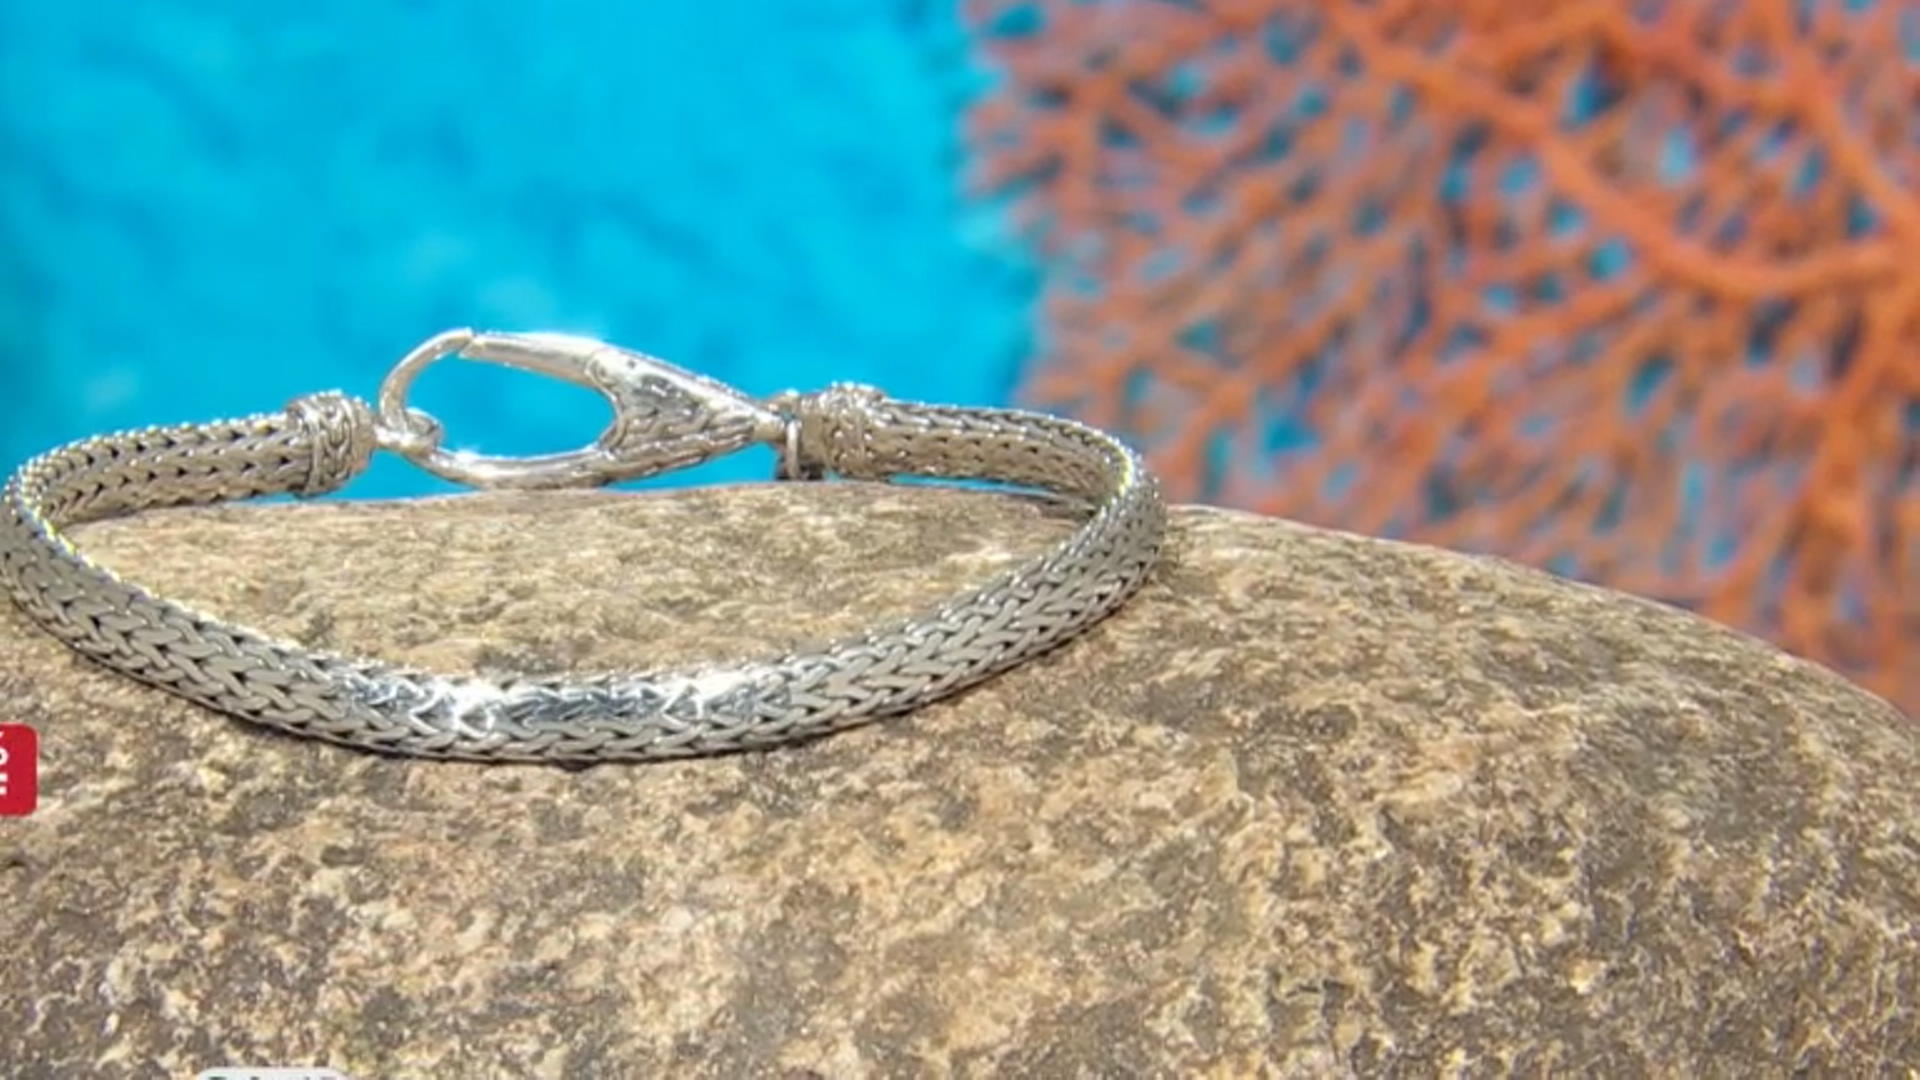 Sterling Silver Snake Chain Bracelet